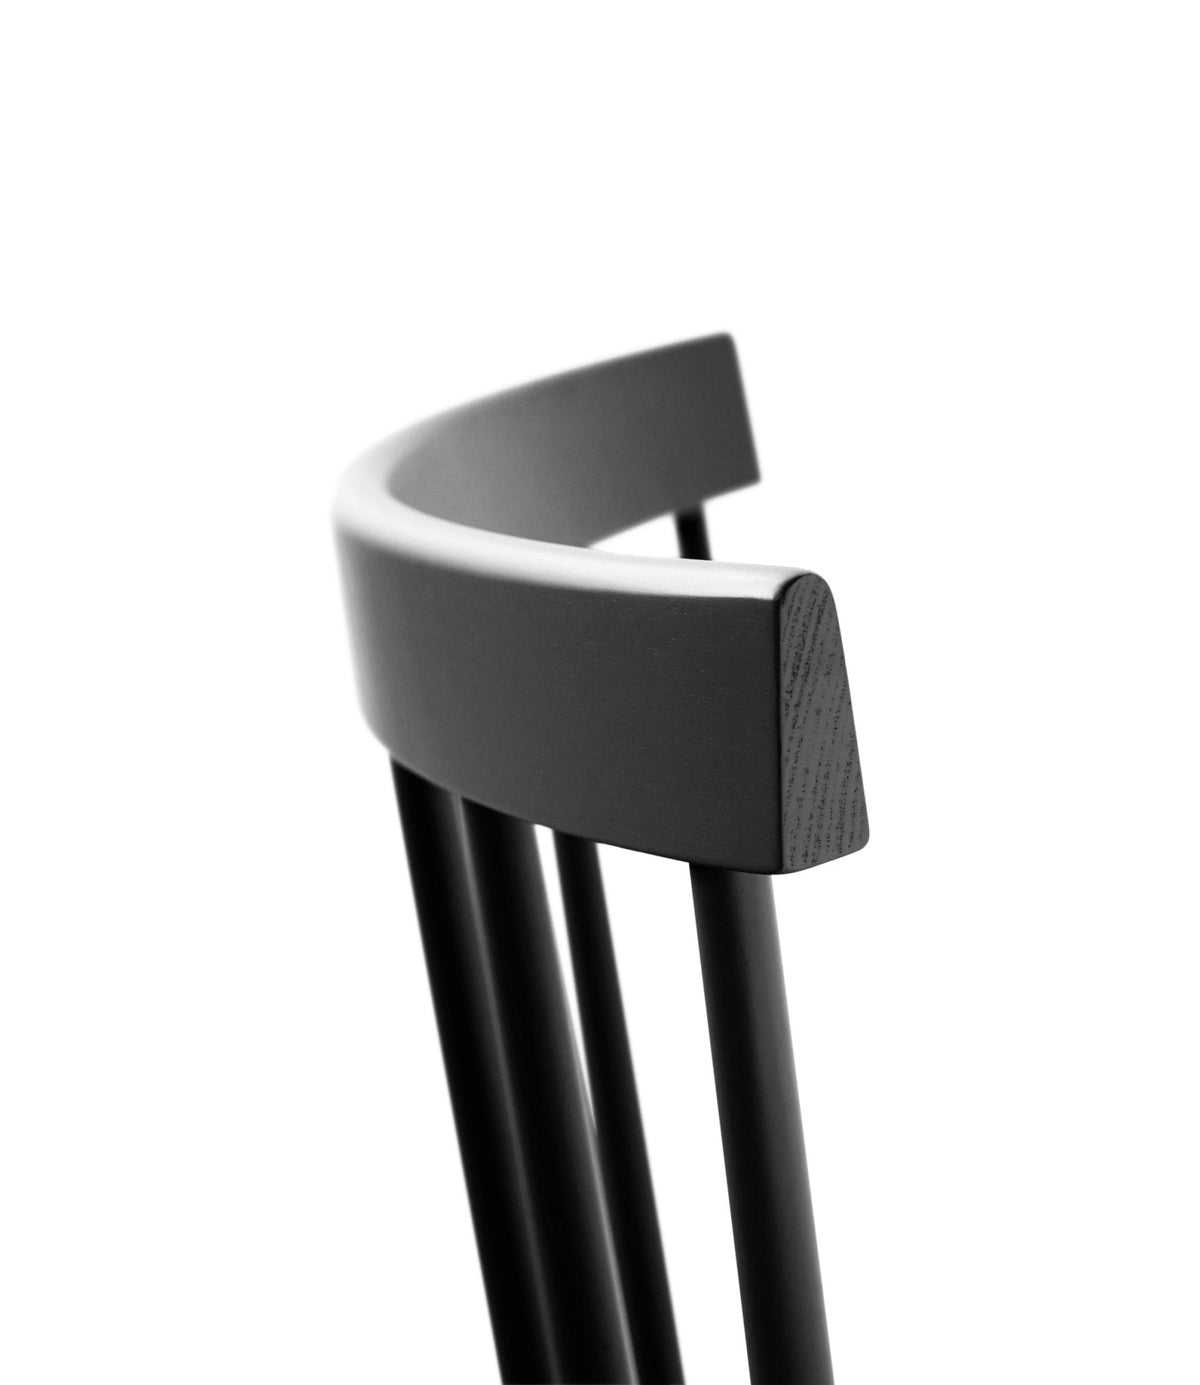 FDB Møbler J46 tuoli musta - Laatukaluste